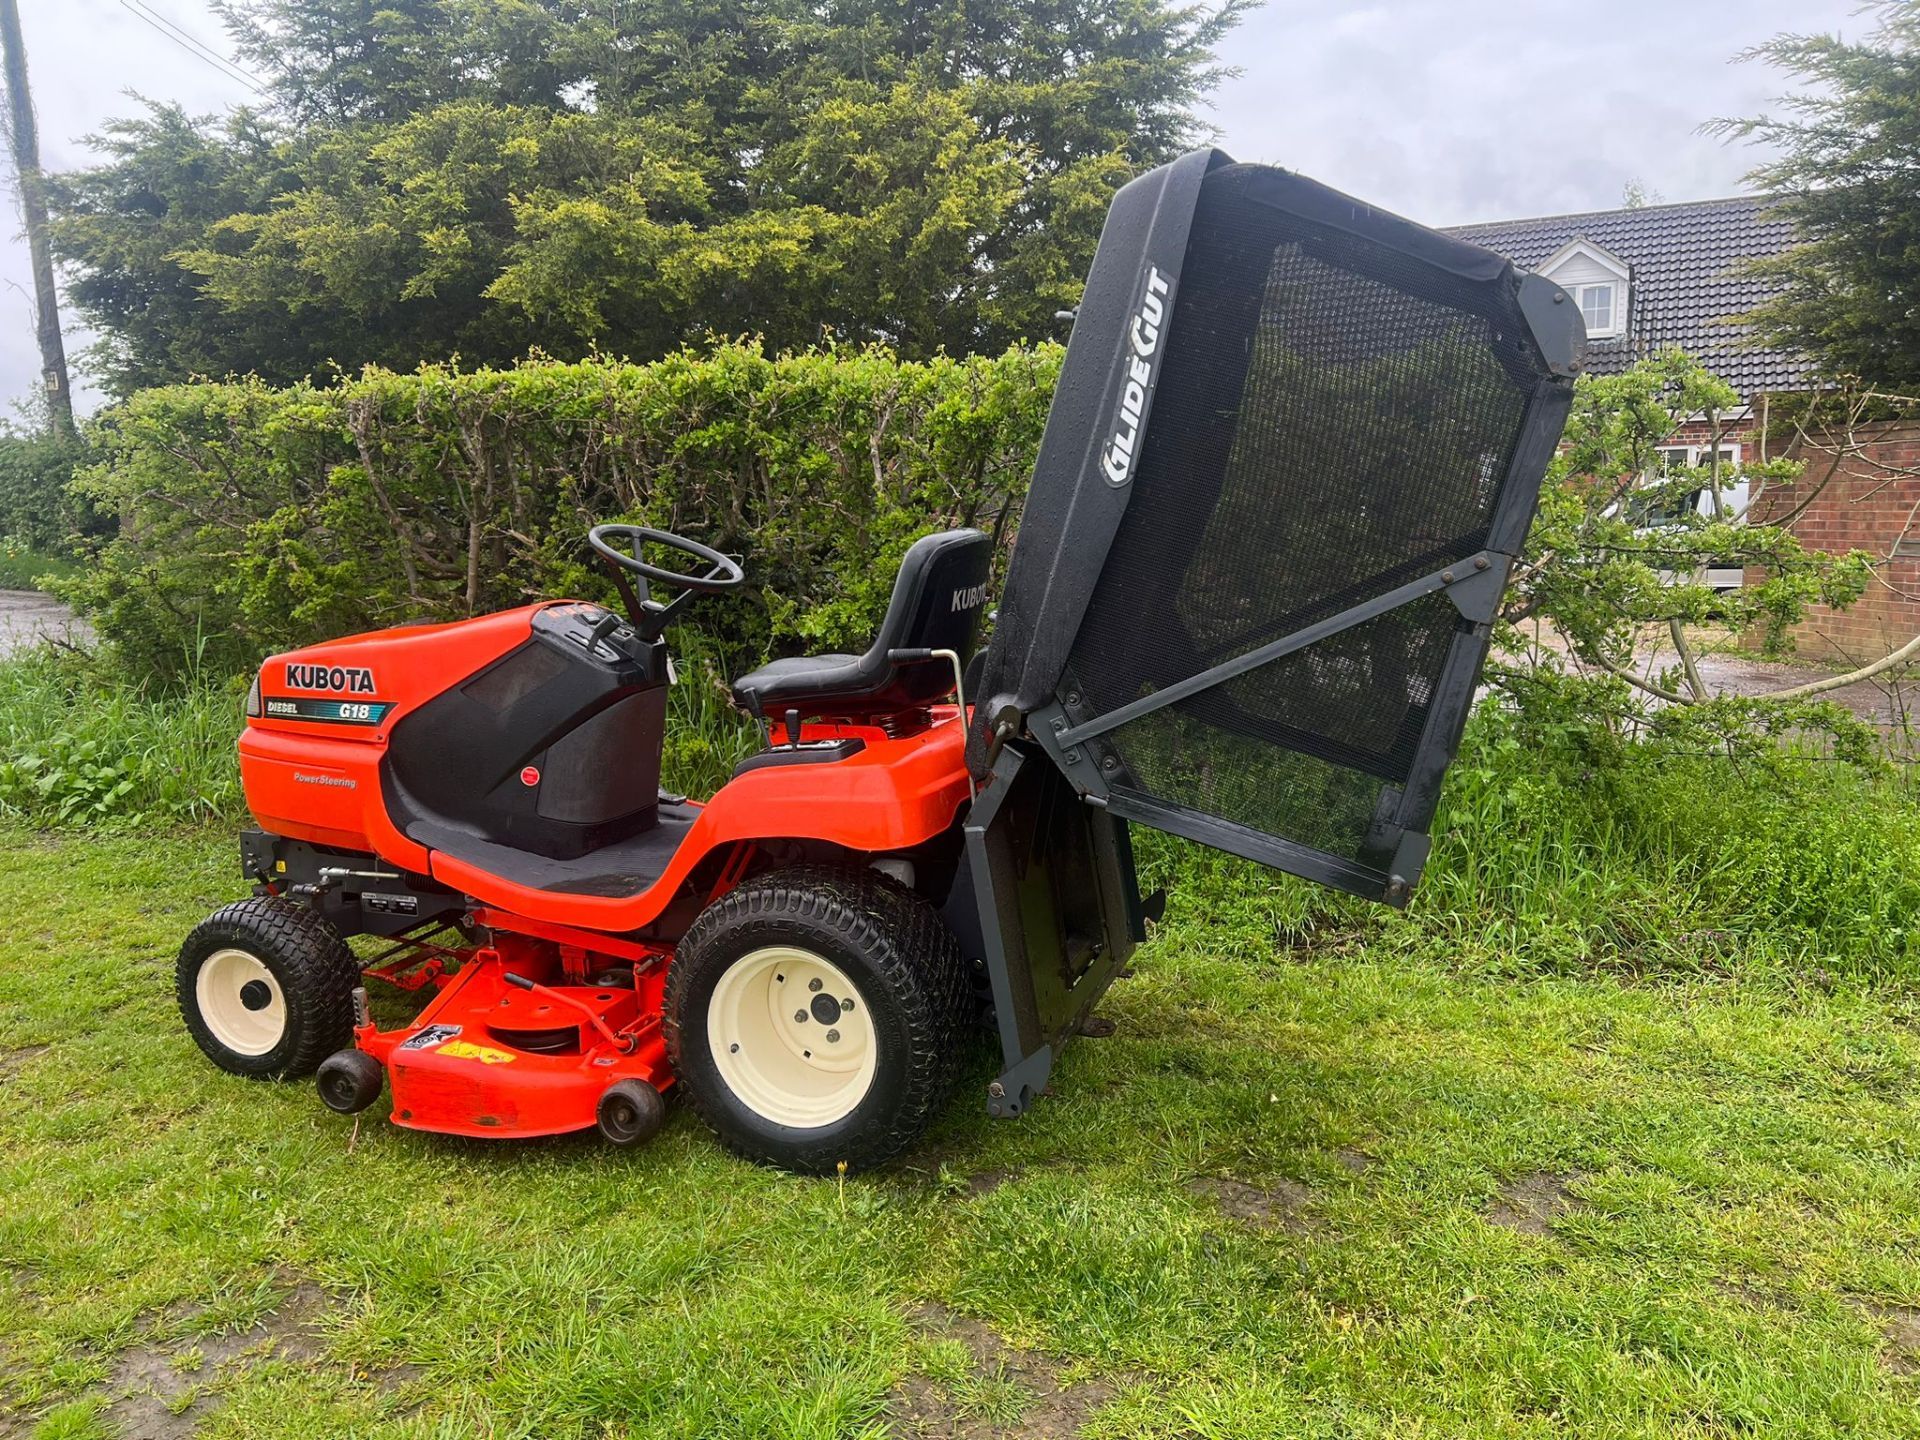 Kubota g18 ride on lawn mower (mint condition) *PLUS VAT* - Image 12 of 26